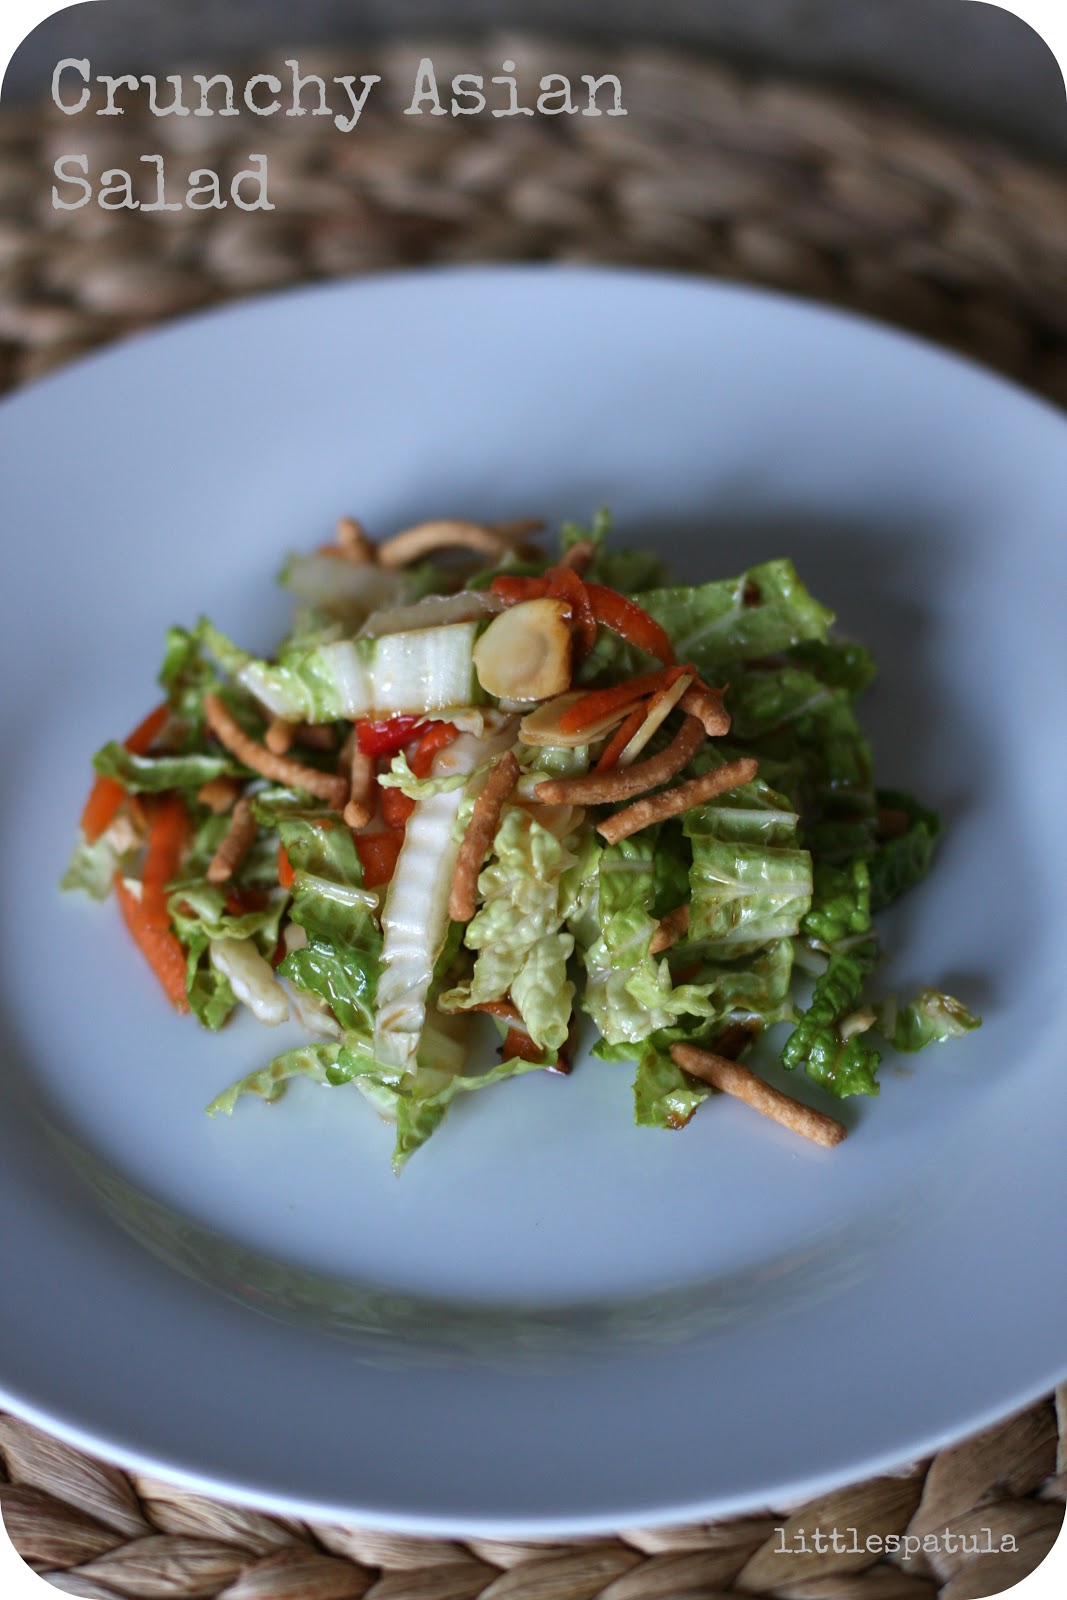 Little Spatula: Crunchy Asian Salad